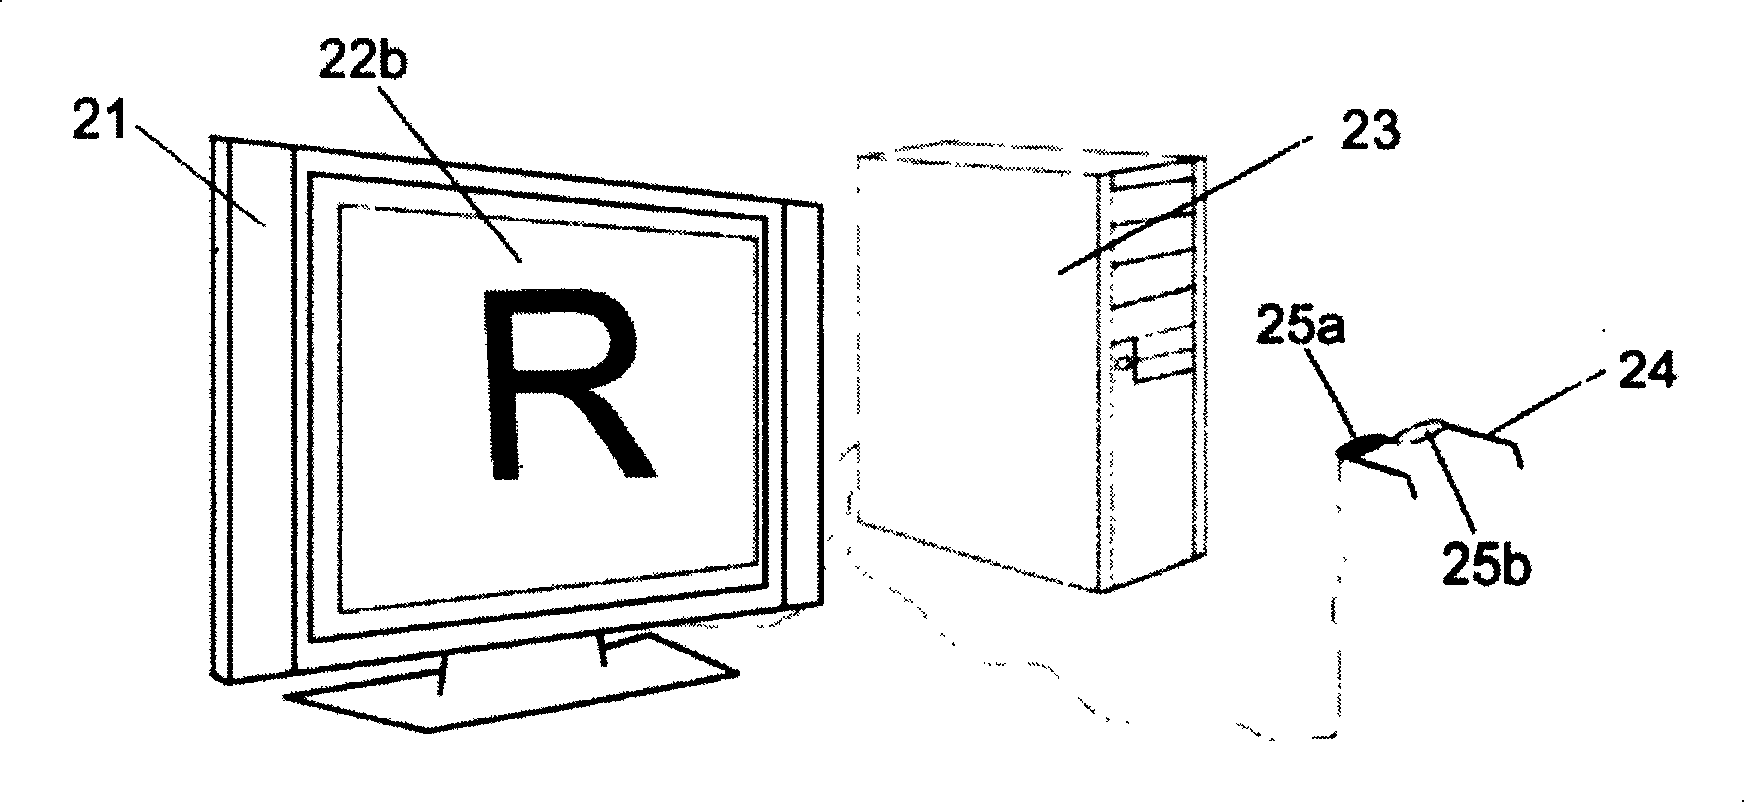 Polarized light grid stereoscopic display device